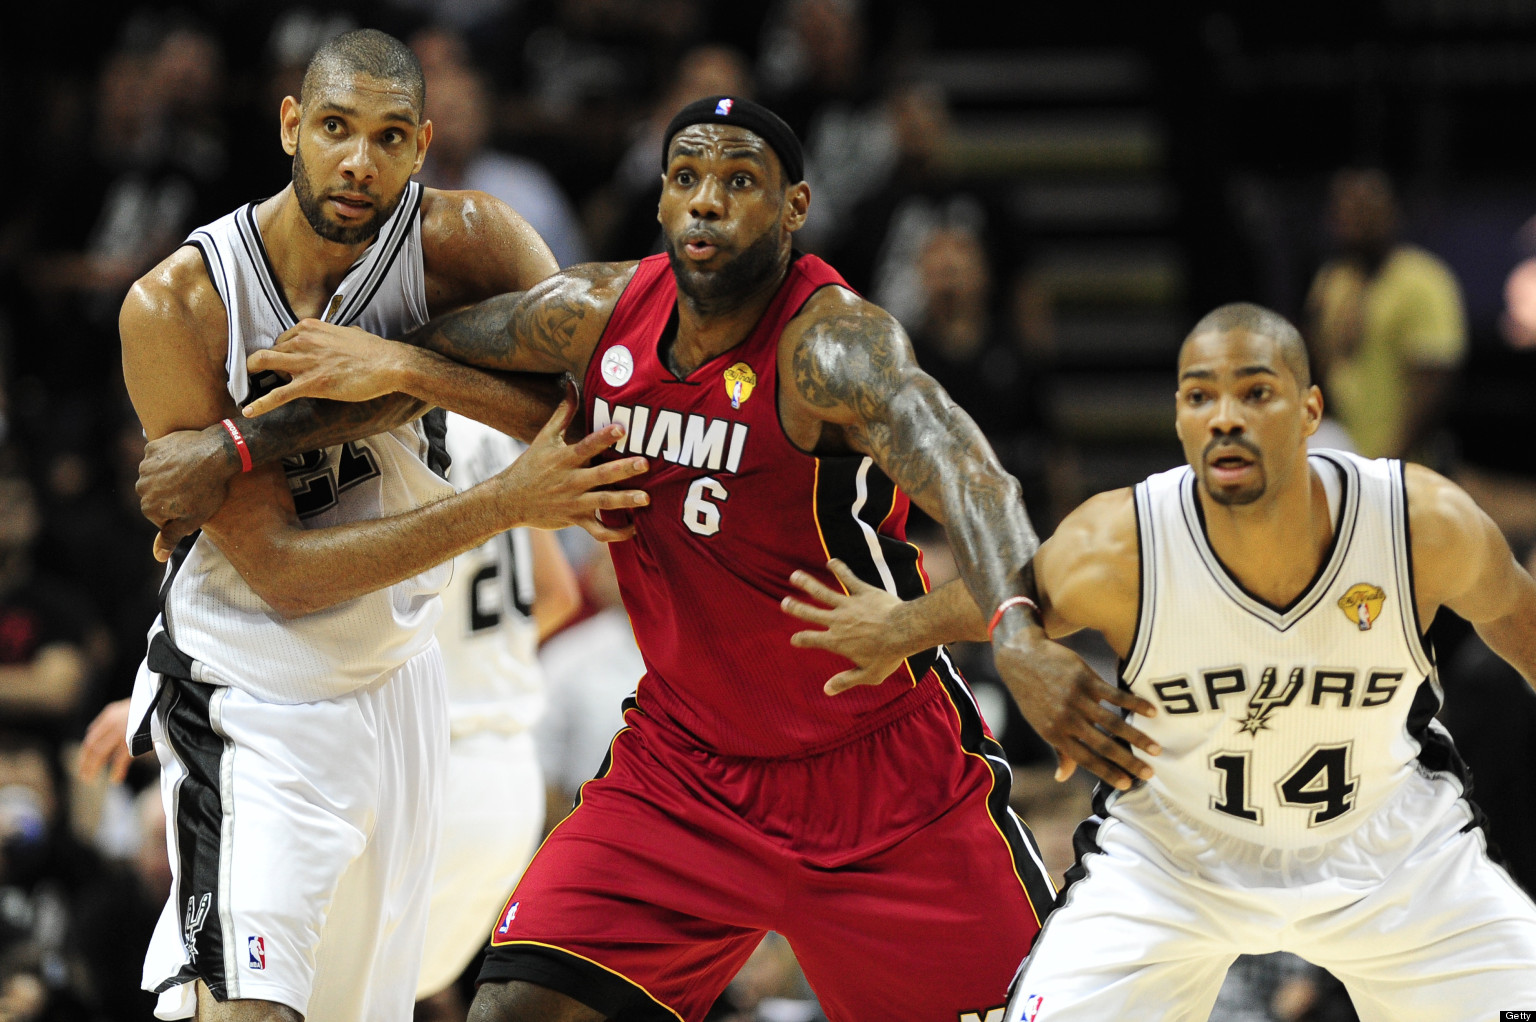 Spurs vs. Heat LIVE UPDATES: NBA Finals Game 4